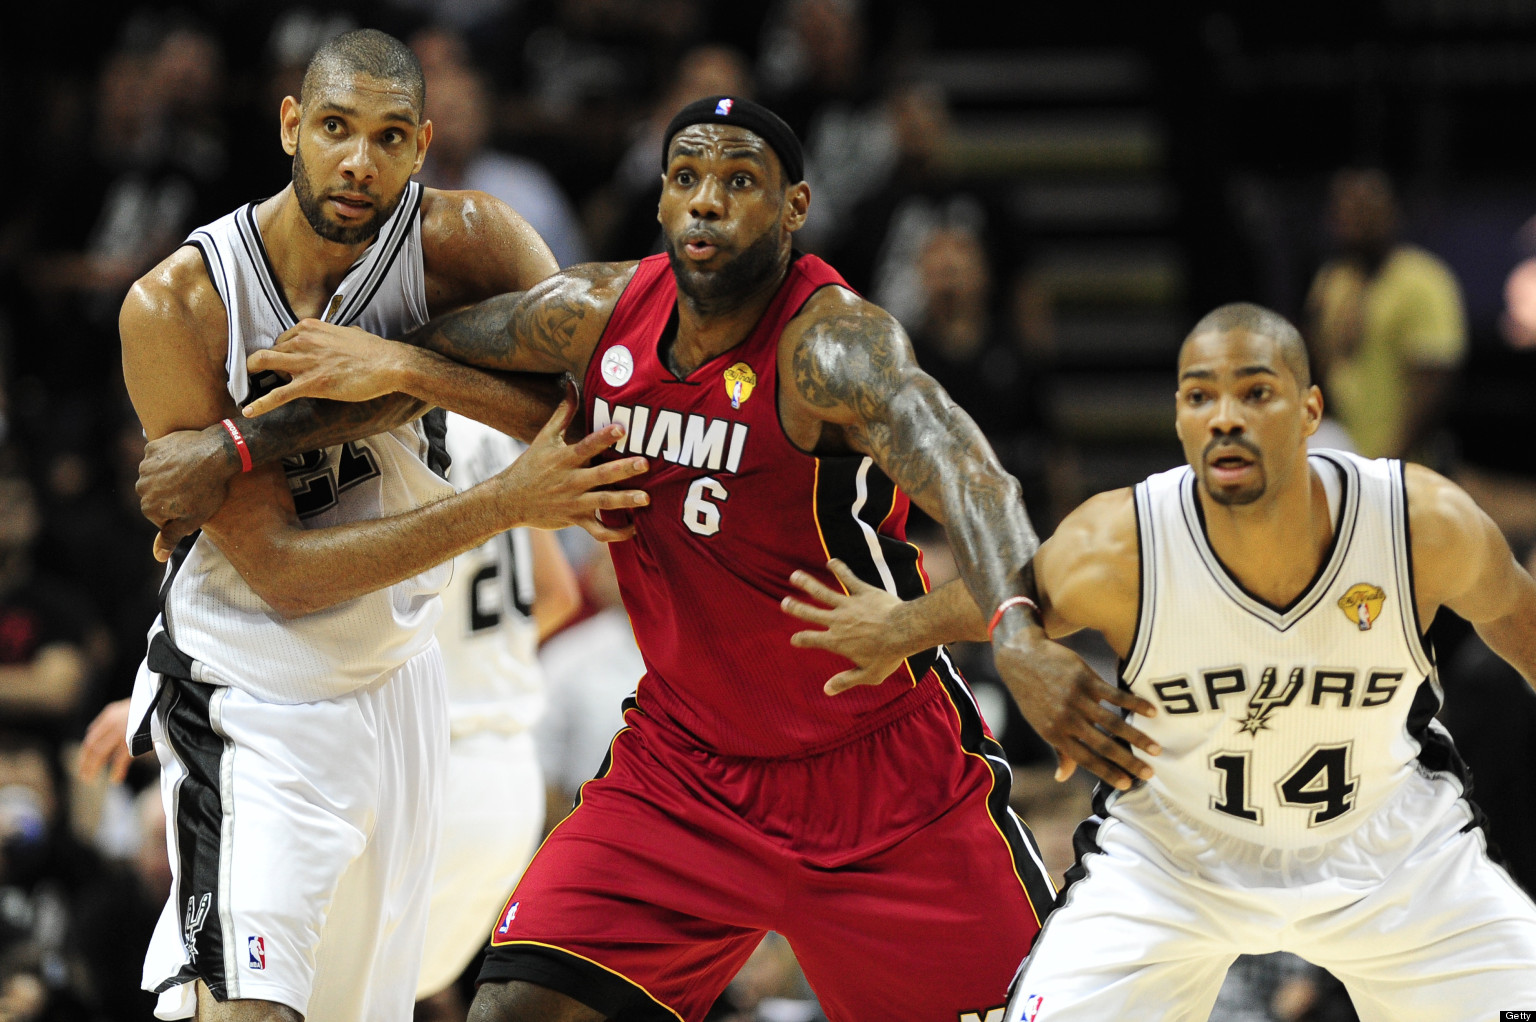 Spurs vs. Heat LIVE UPDATES: NBA Finals Game 4